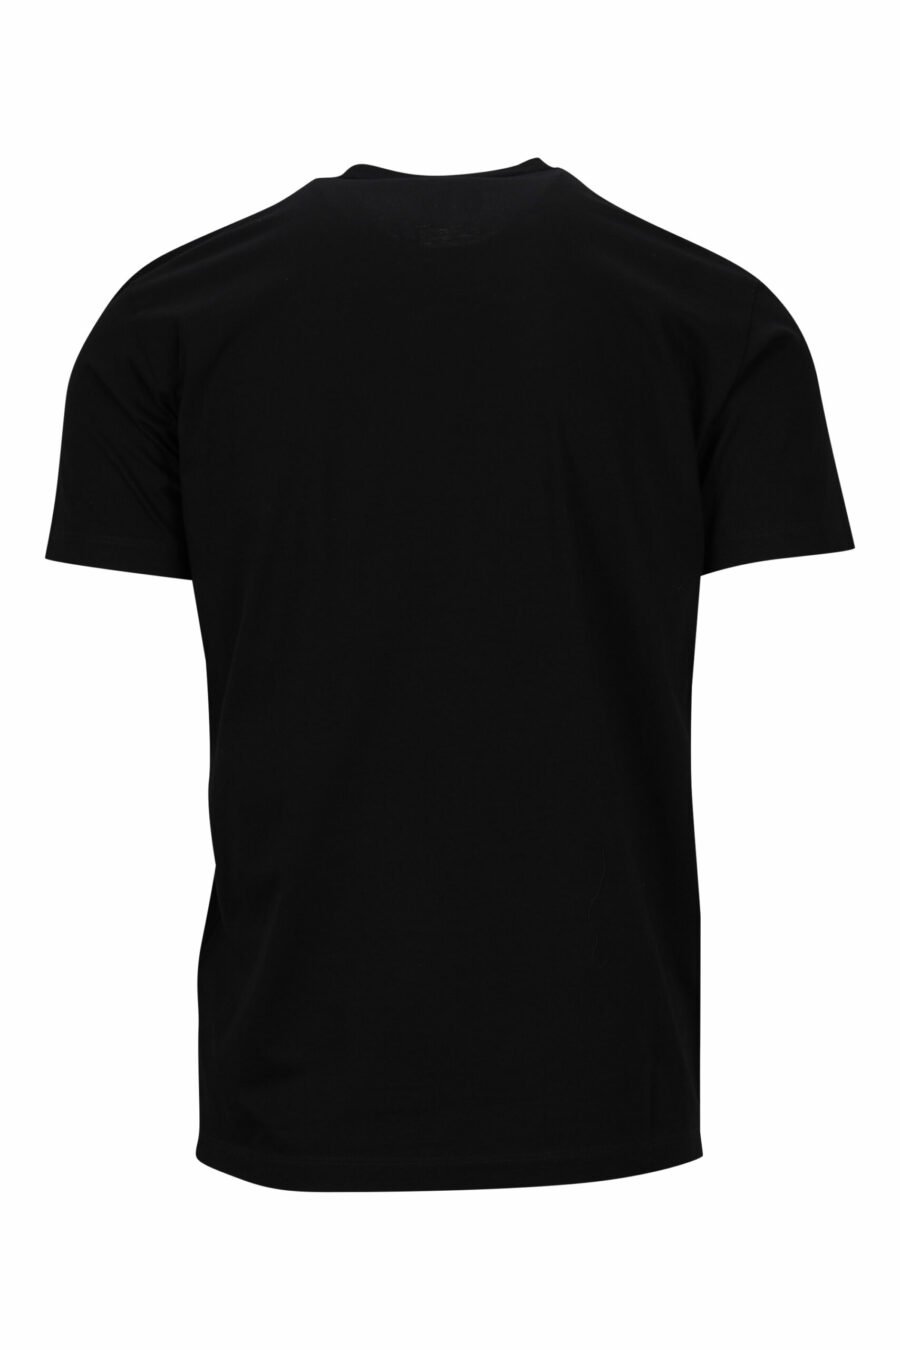 Camiseta negra con maxilogo "icon" garabatos - 8054148362898 1 scaled